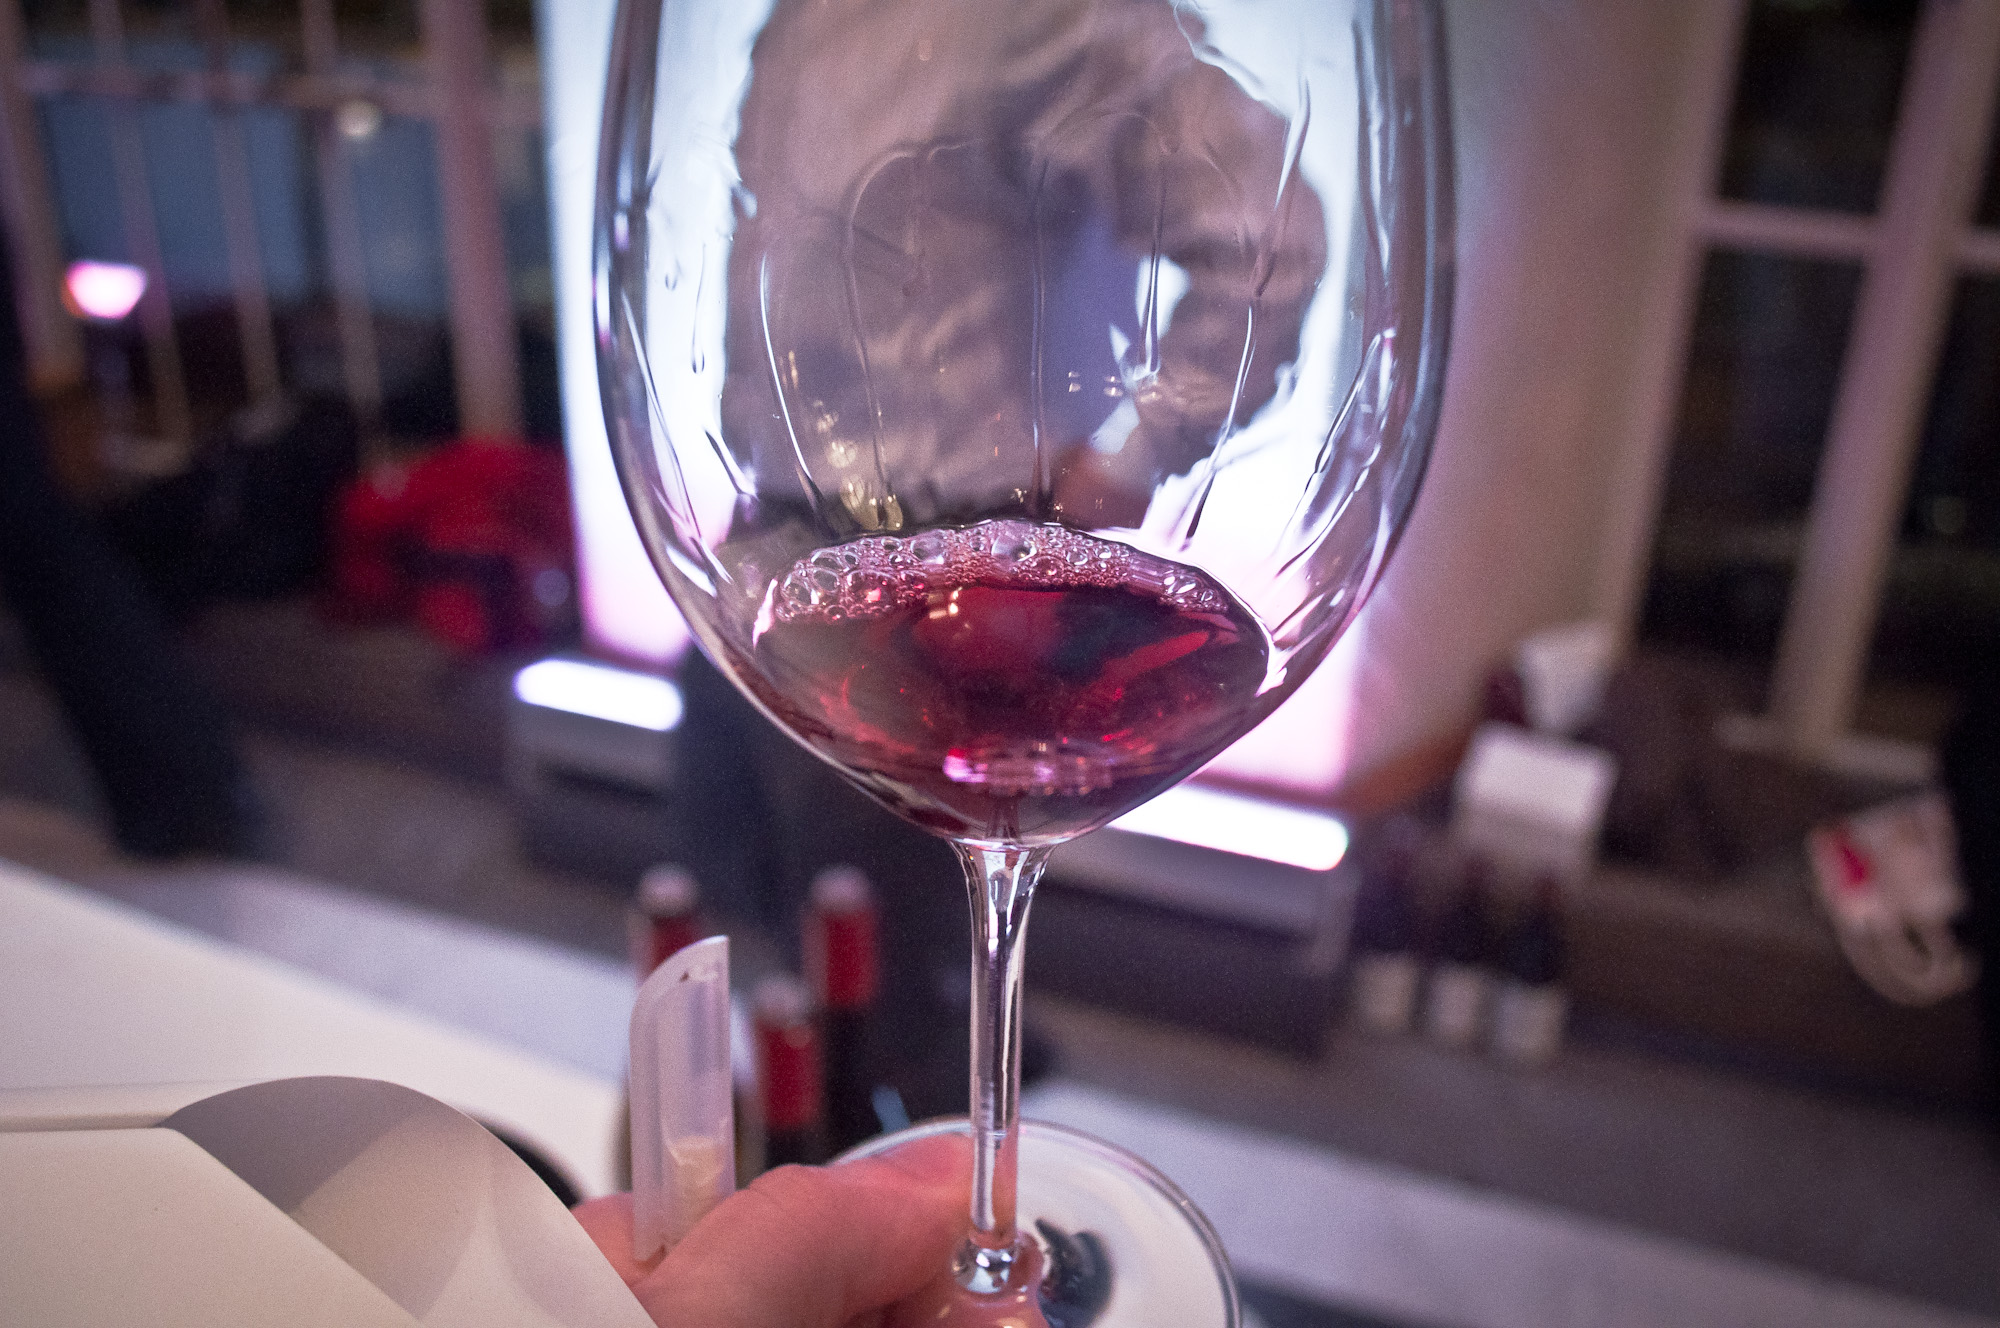 en primeur Burgundy shines in the Wine Rambler's hand at RIBA